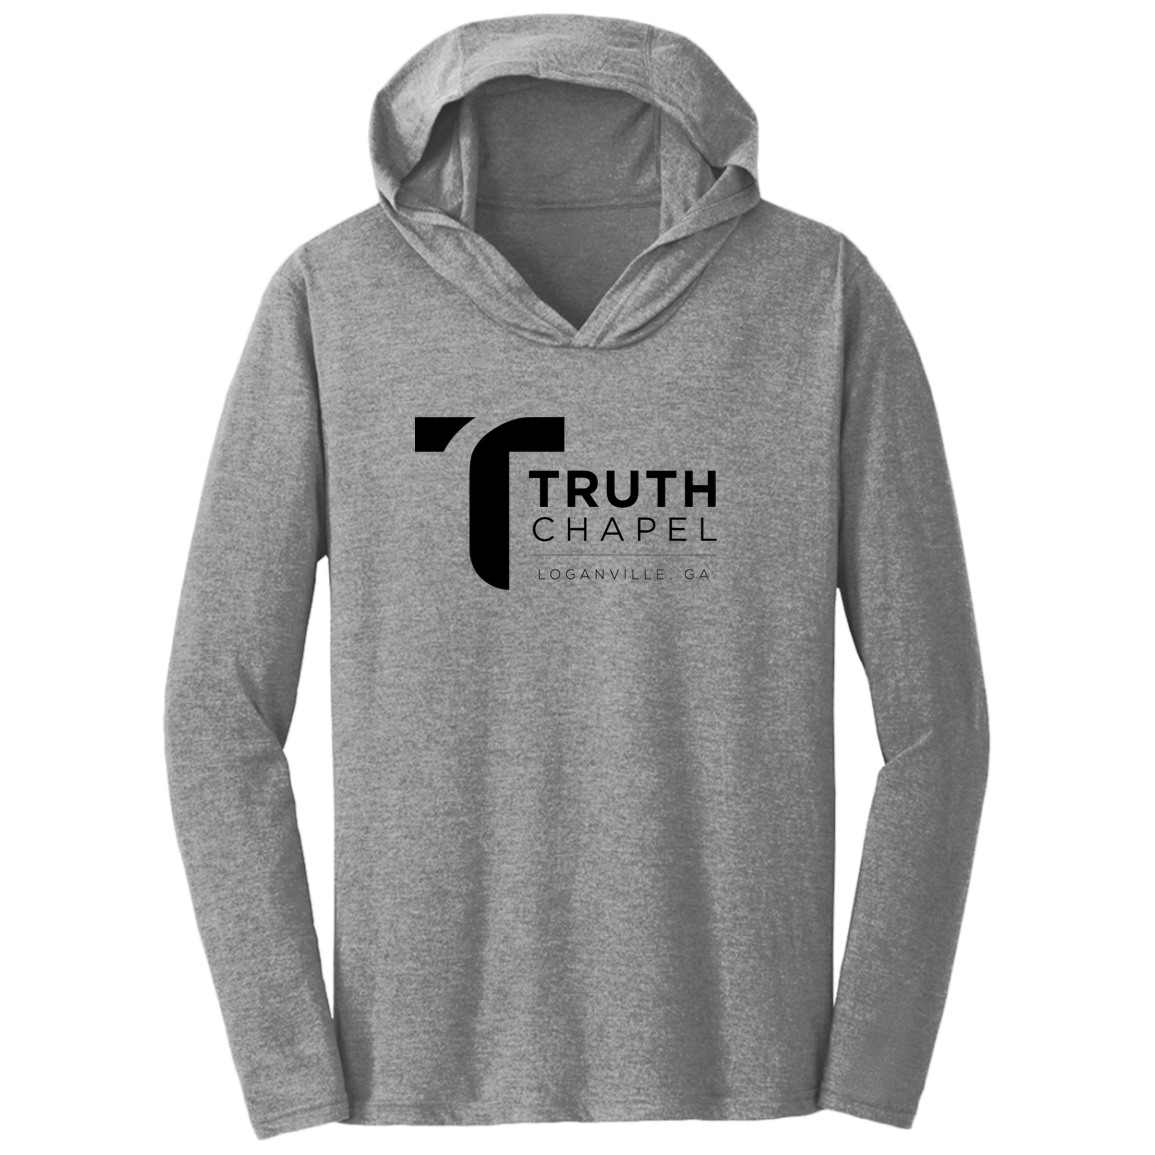 Truth Chapel - Hoodies